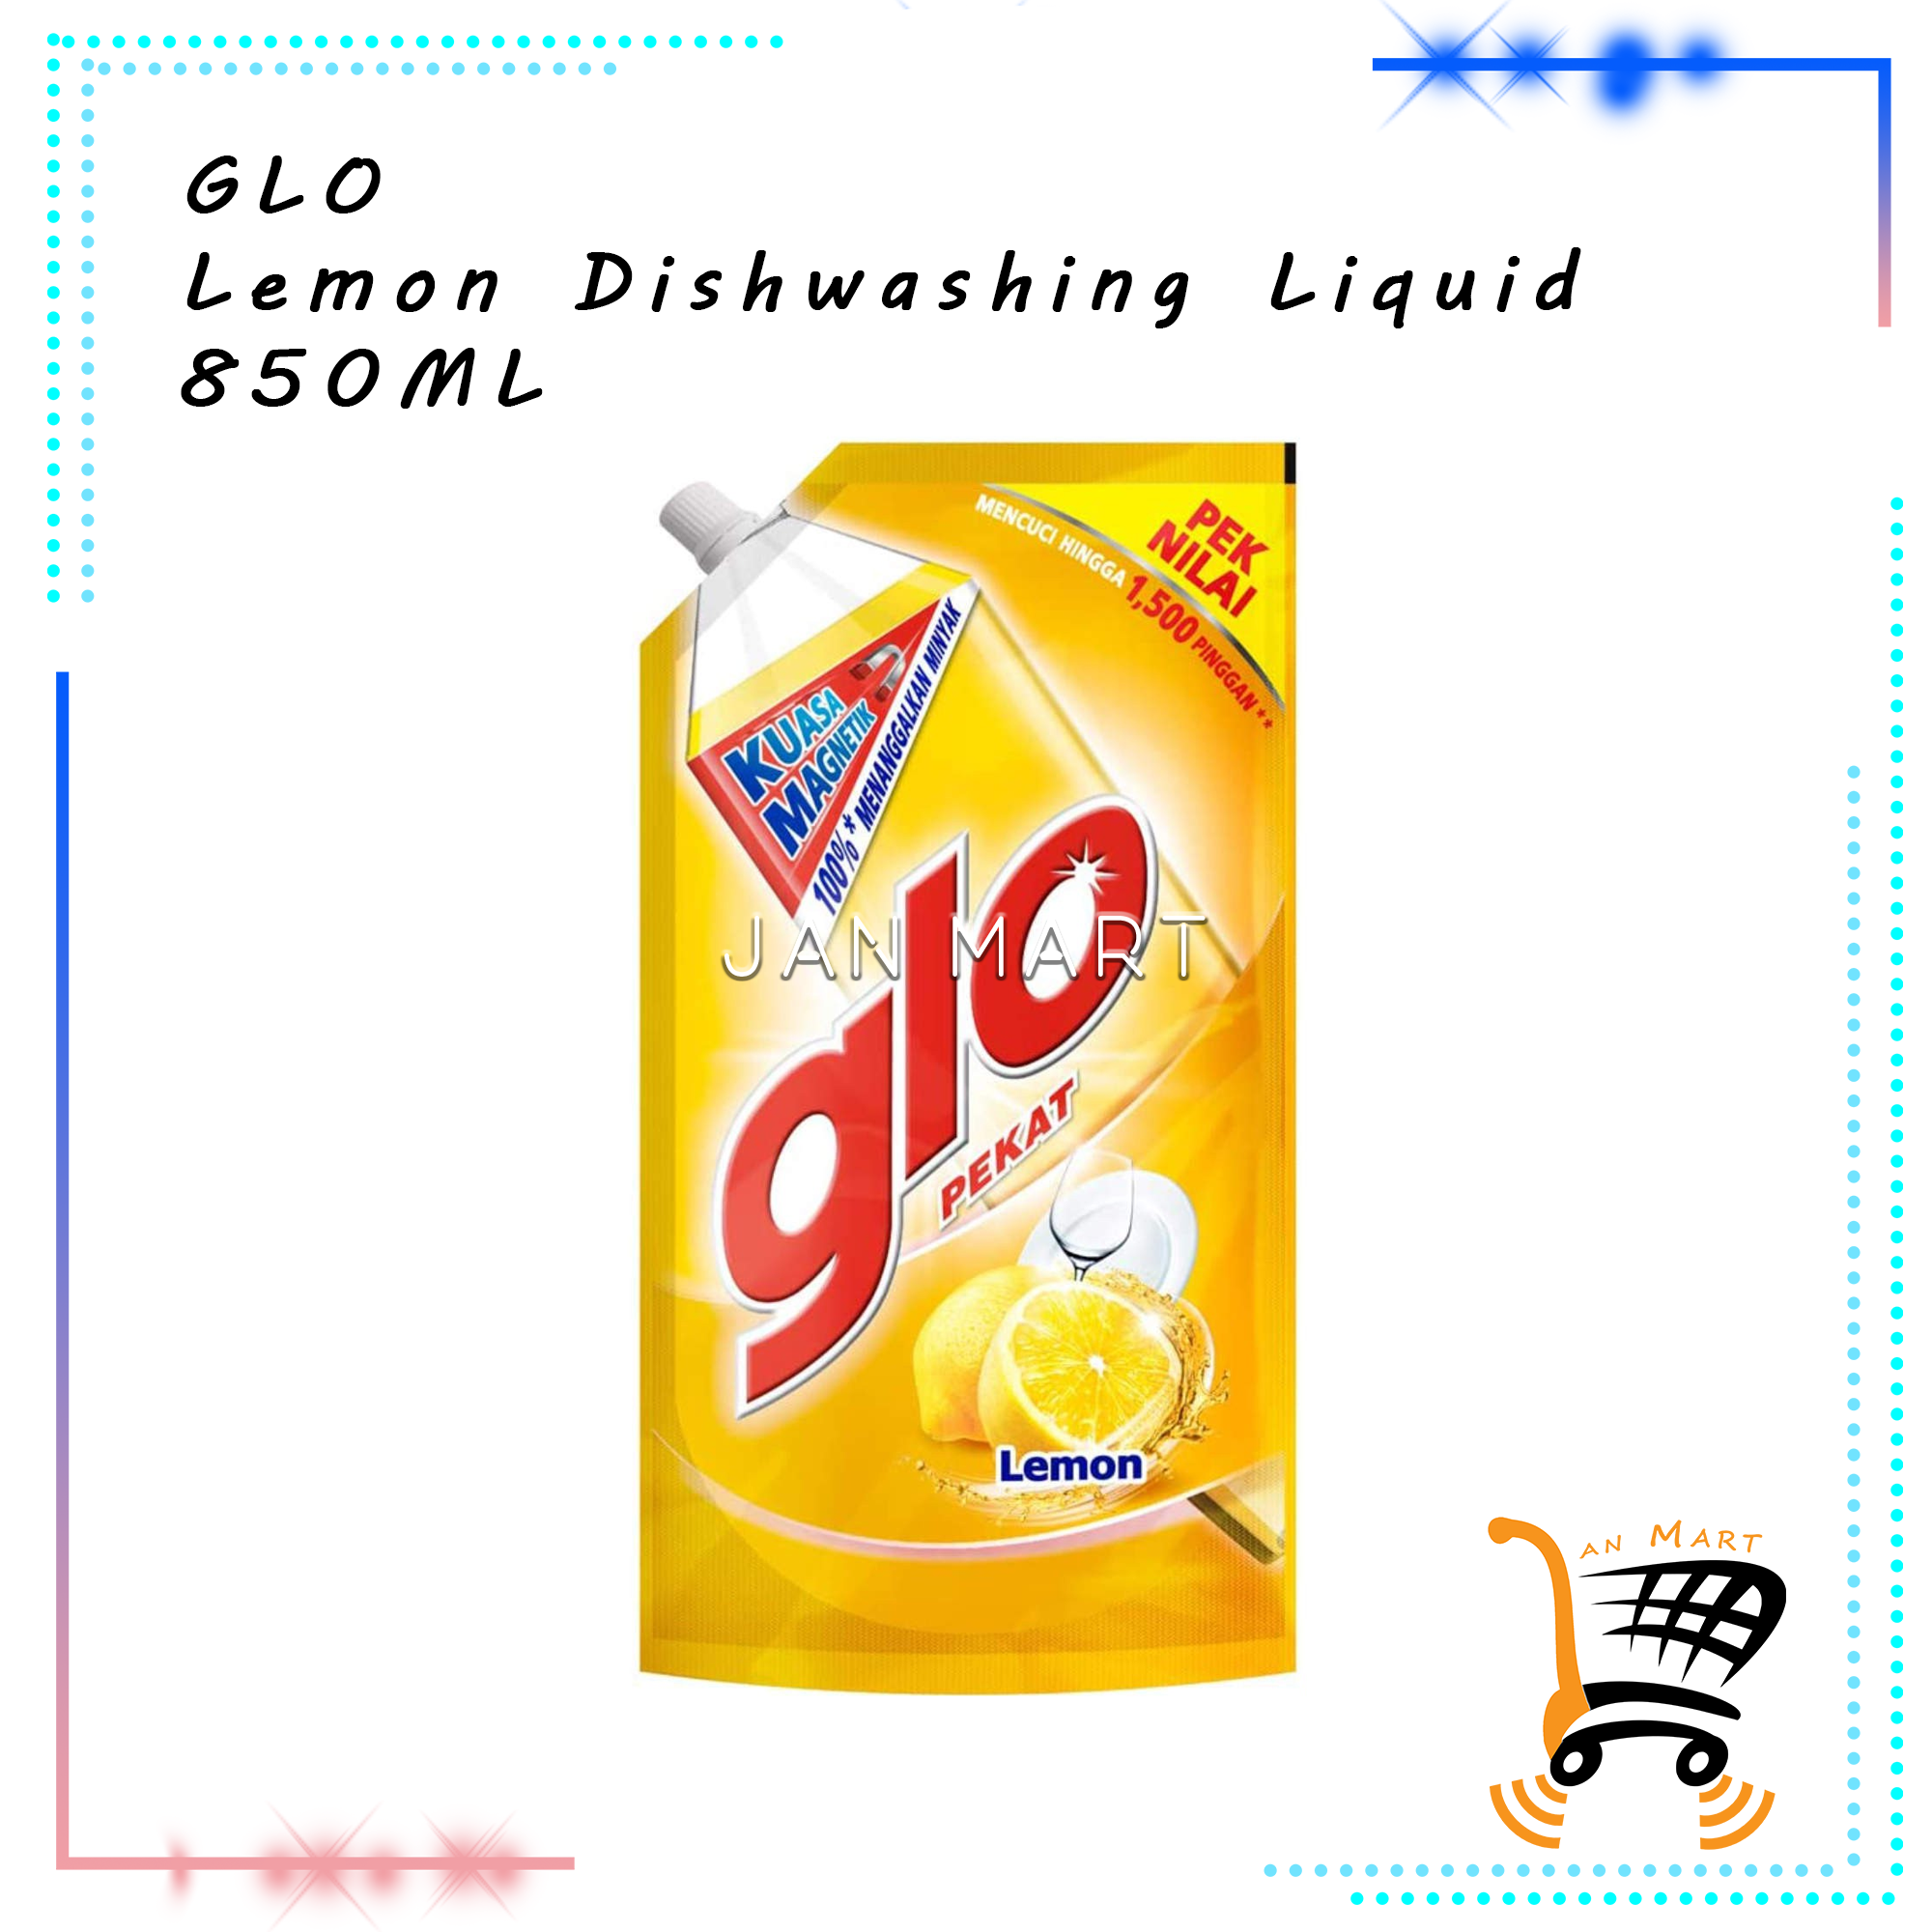 GLO Active Foam Lemon Dishwashing Liquid Refill 850ML